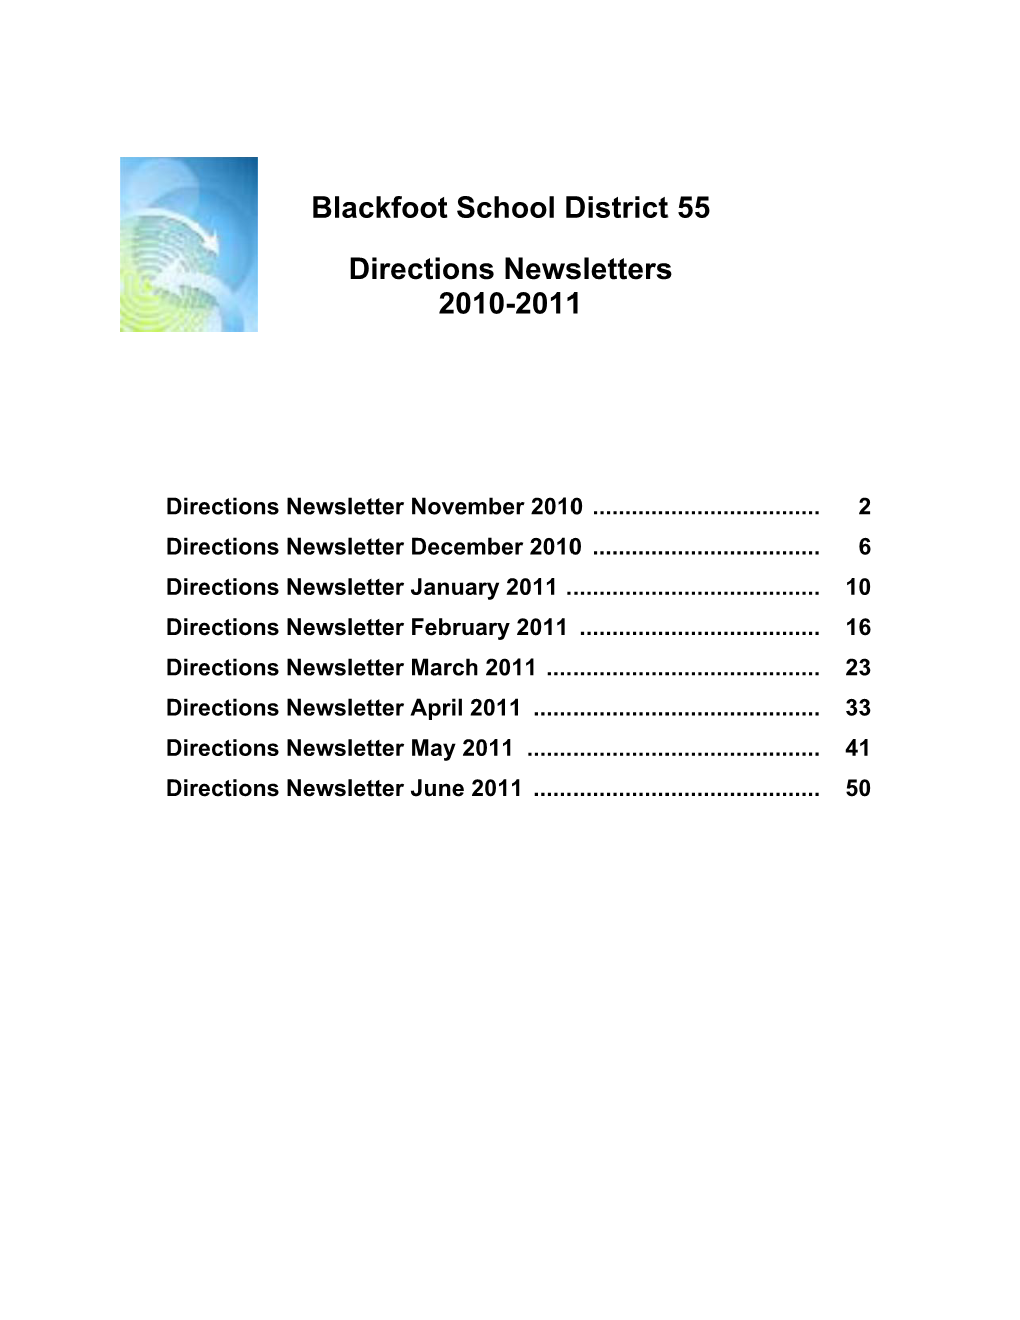 Black Dir Kfoot S Rection 201 Chool D S News 10-2011 District Sletters 1 T 55 S